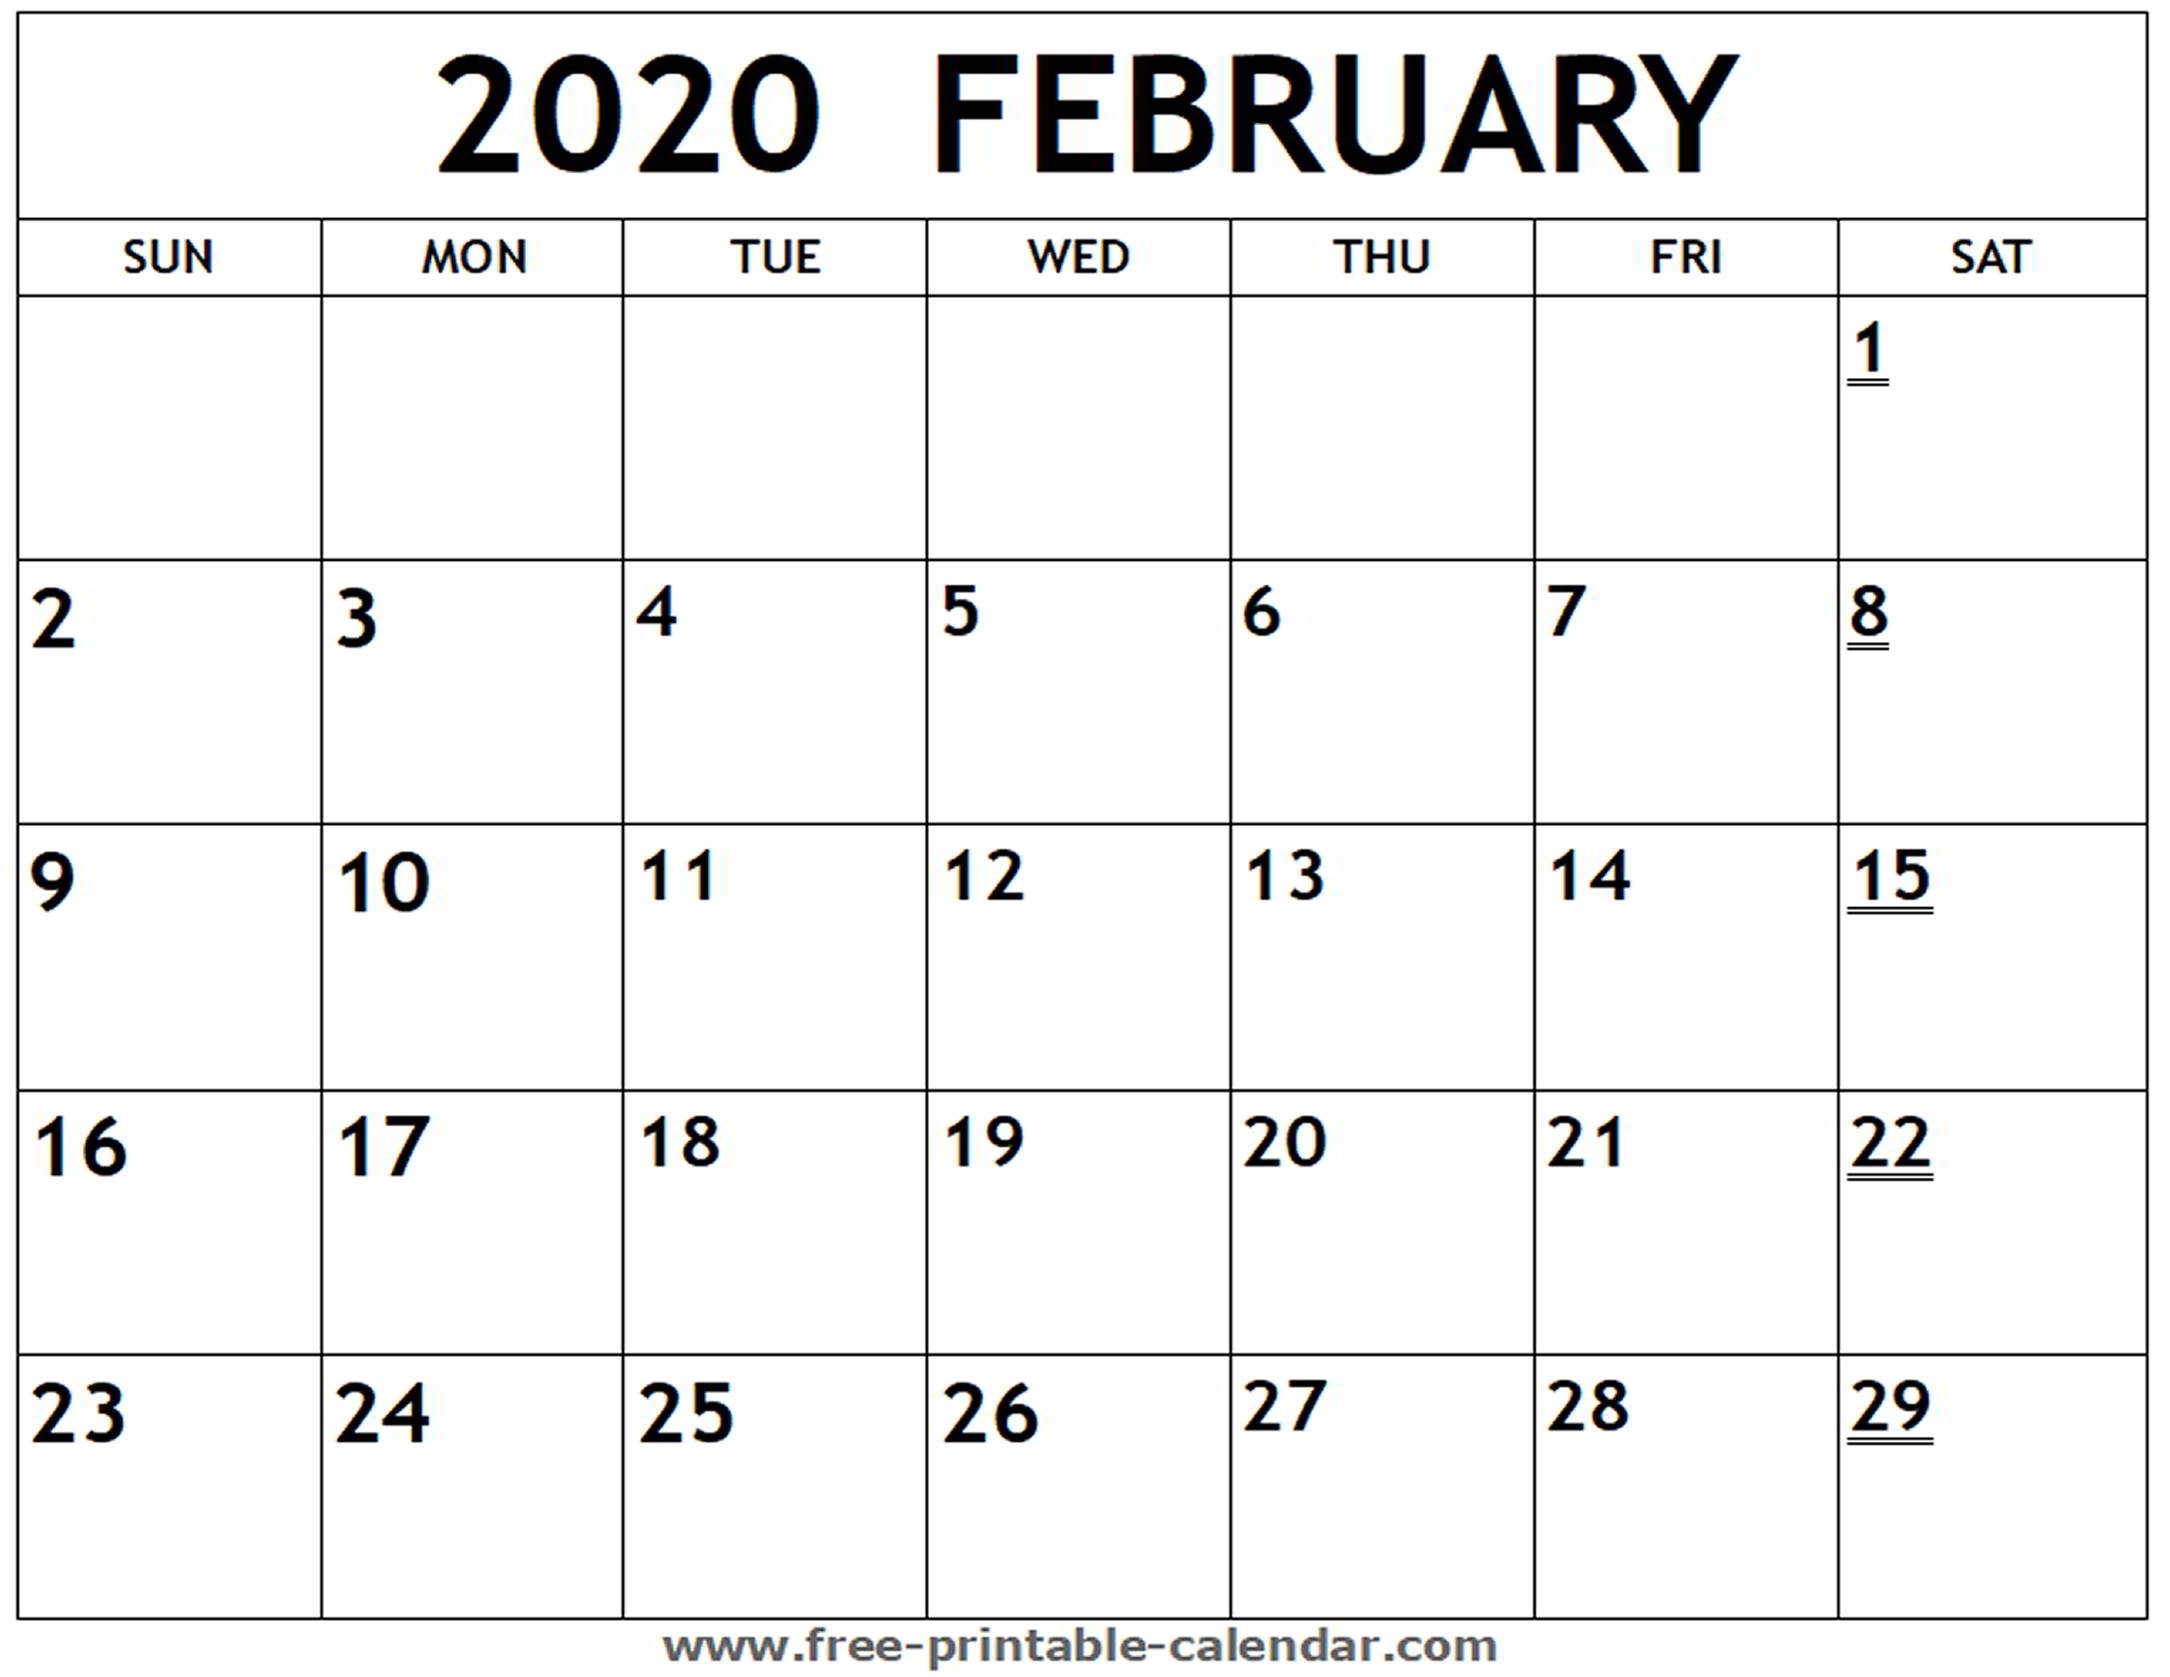 Printable 2020 February Calendar - Free-Printable-Calendar